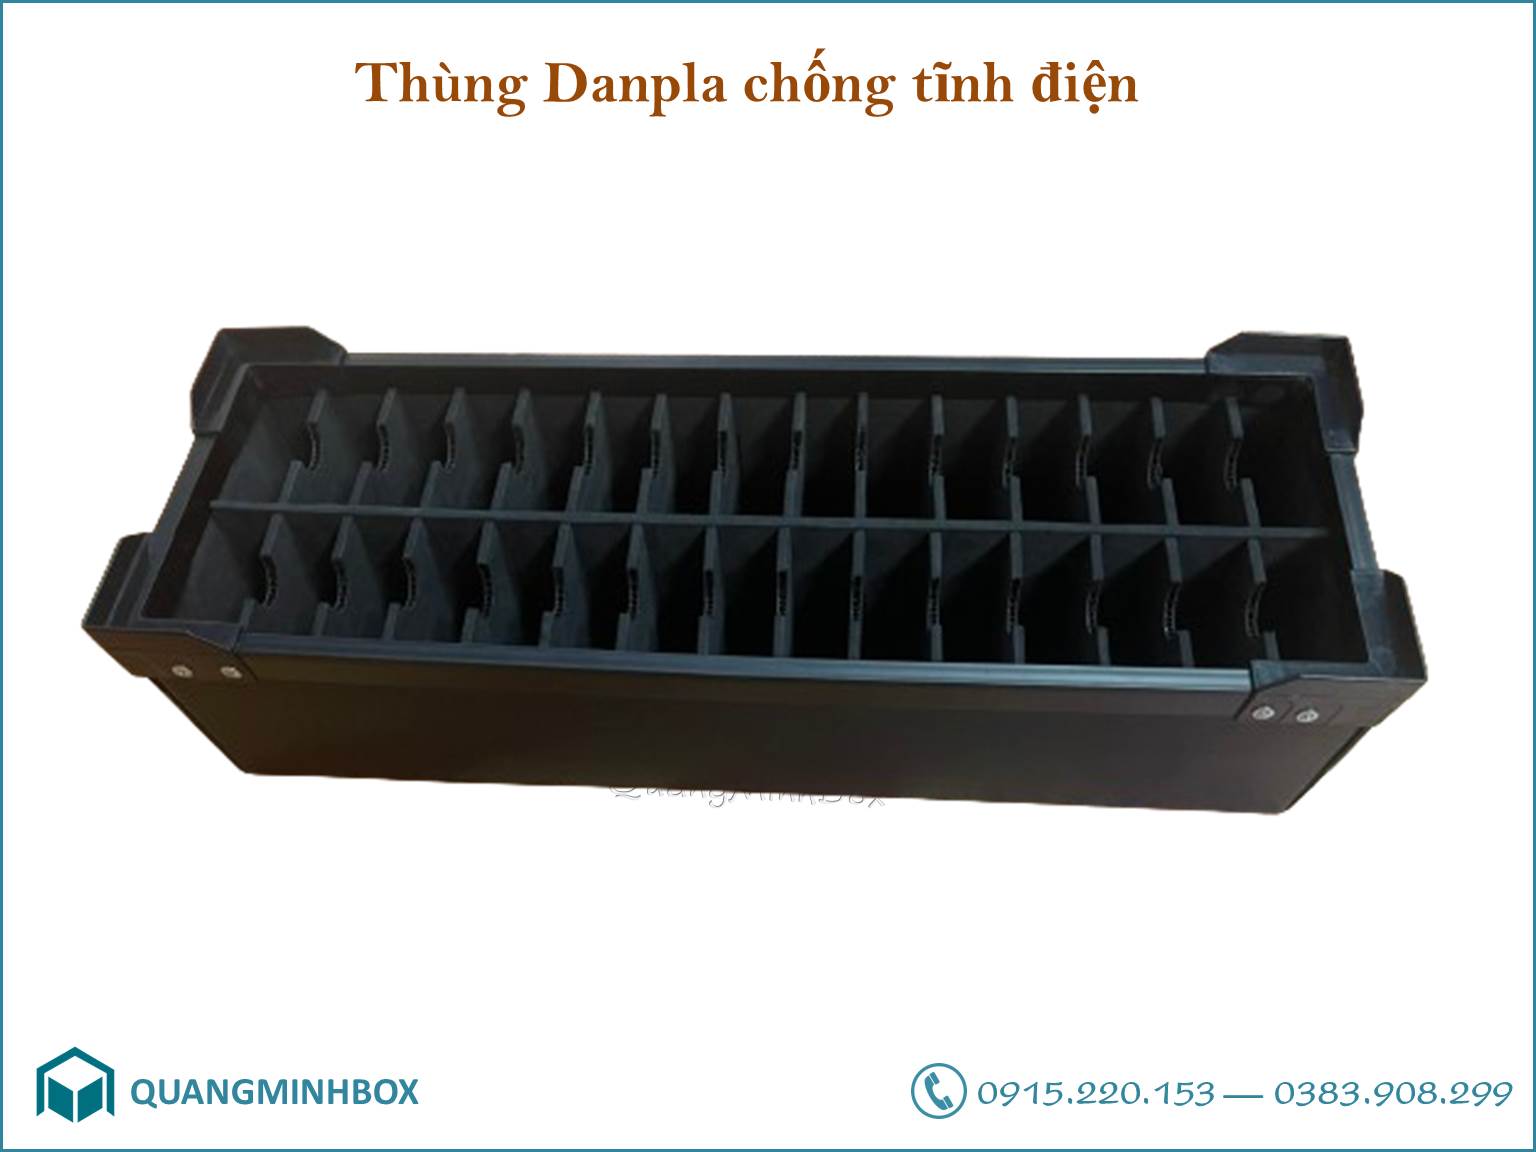 thung-danpla-chong-tinh-dien-chia-30-ngan